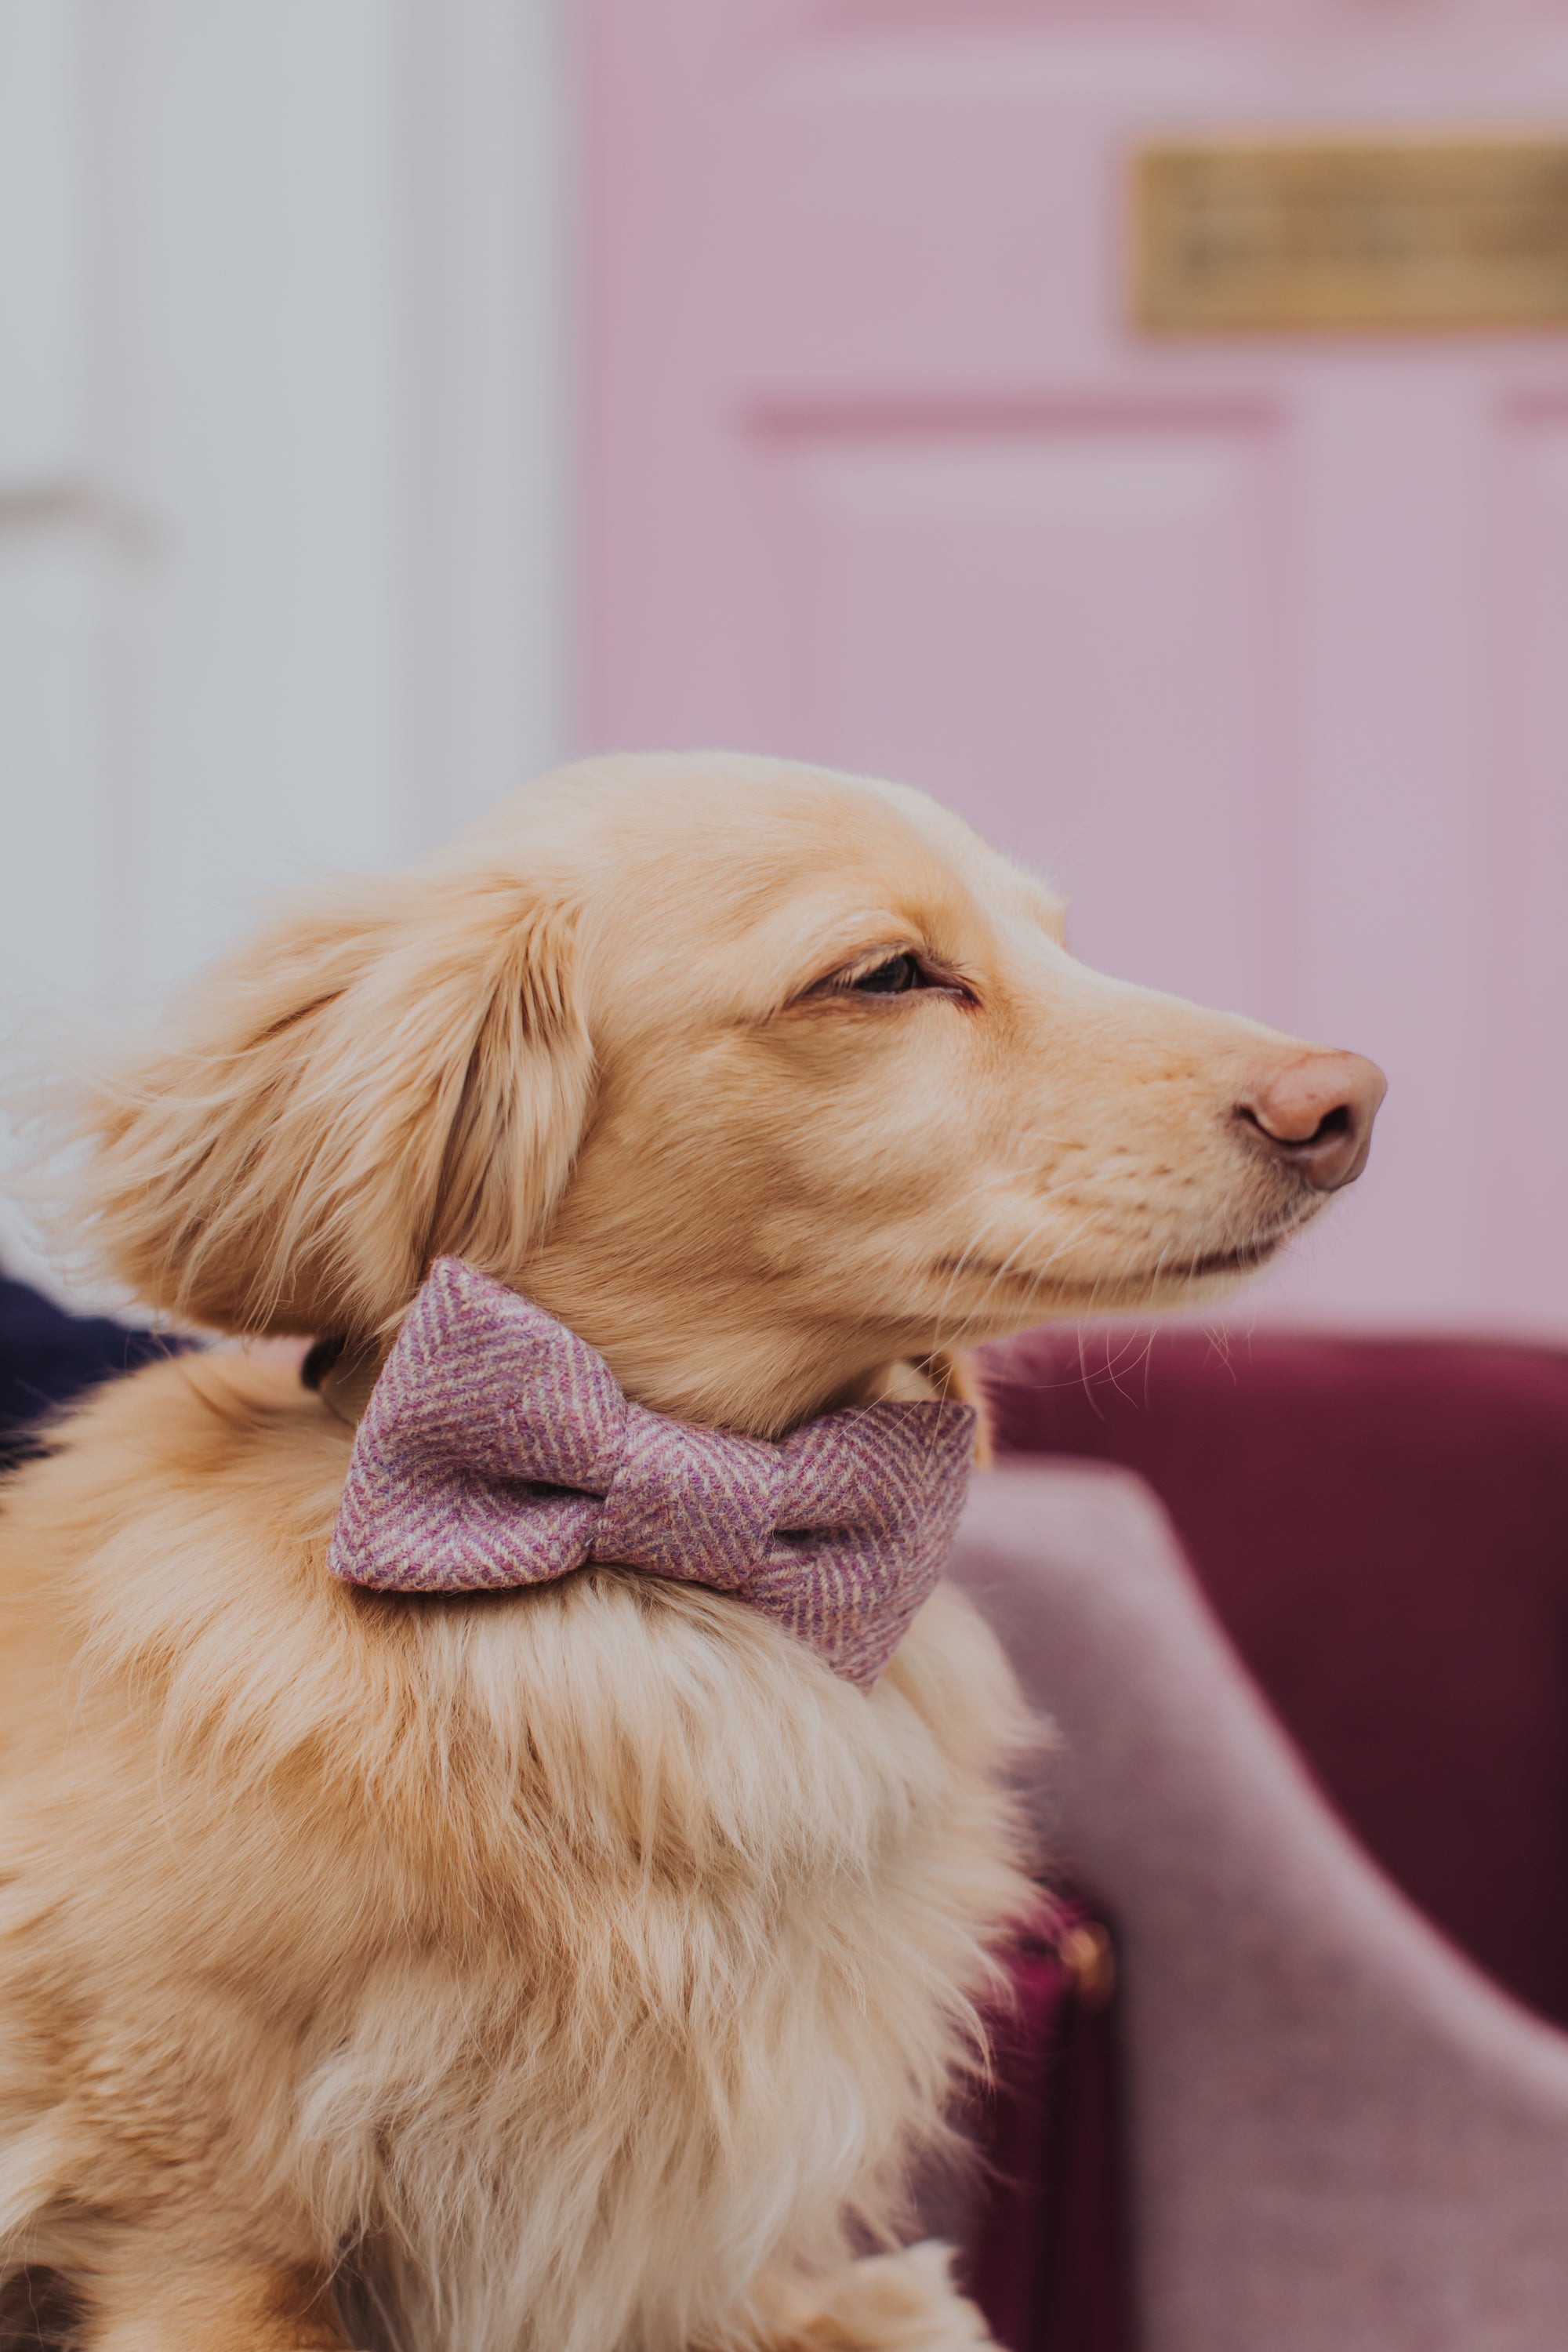 Pink Herringbone Dog Bow Tie NEW!